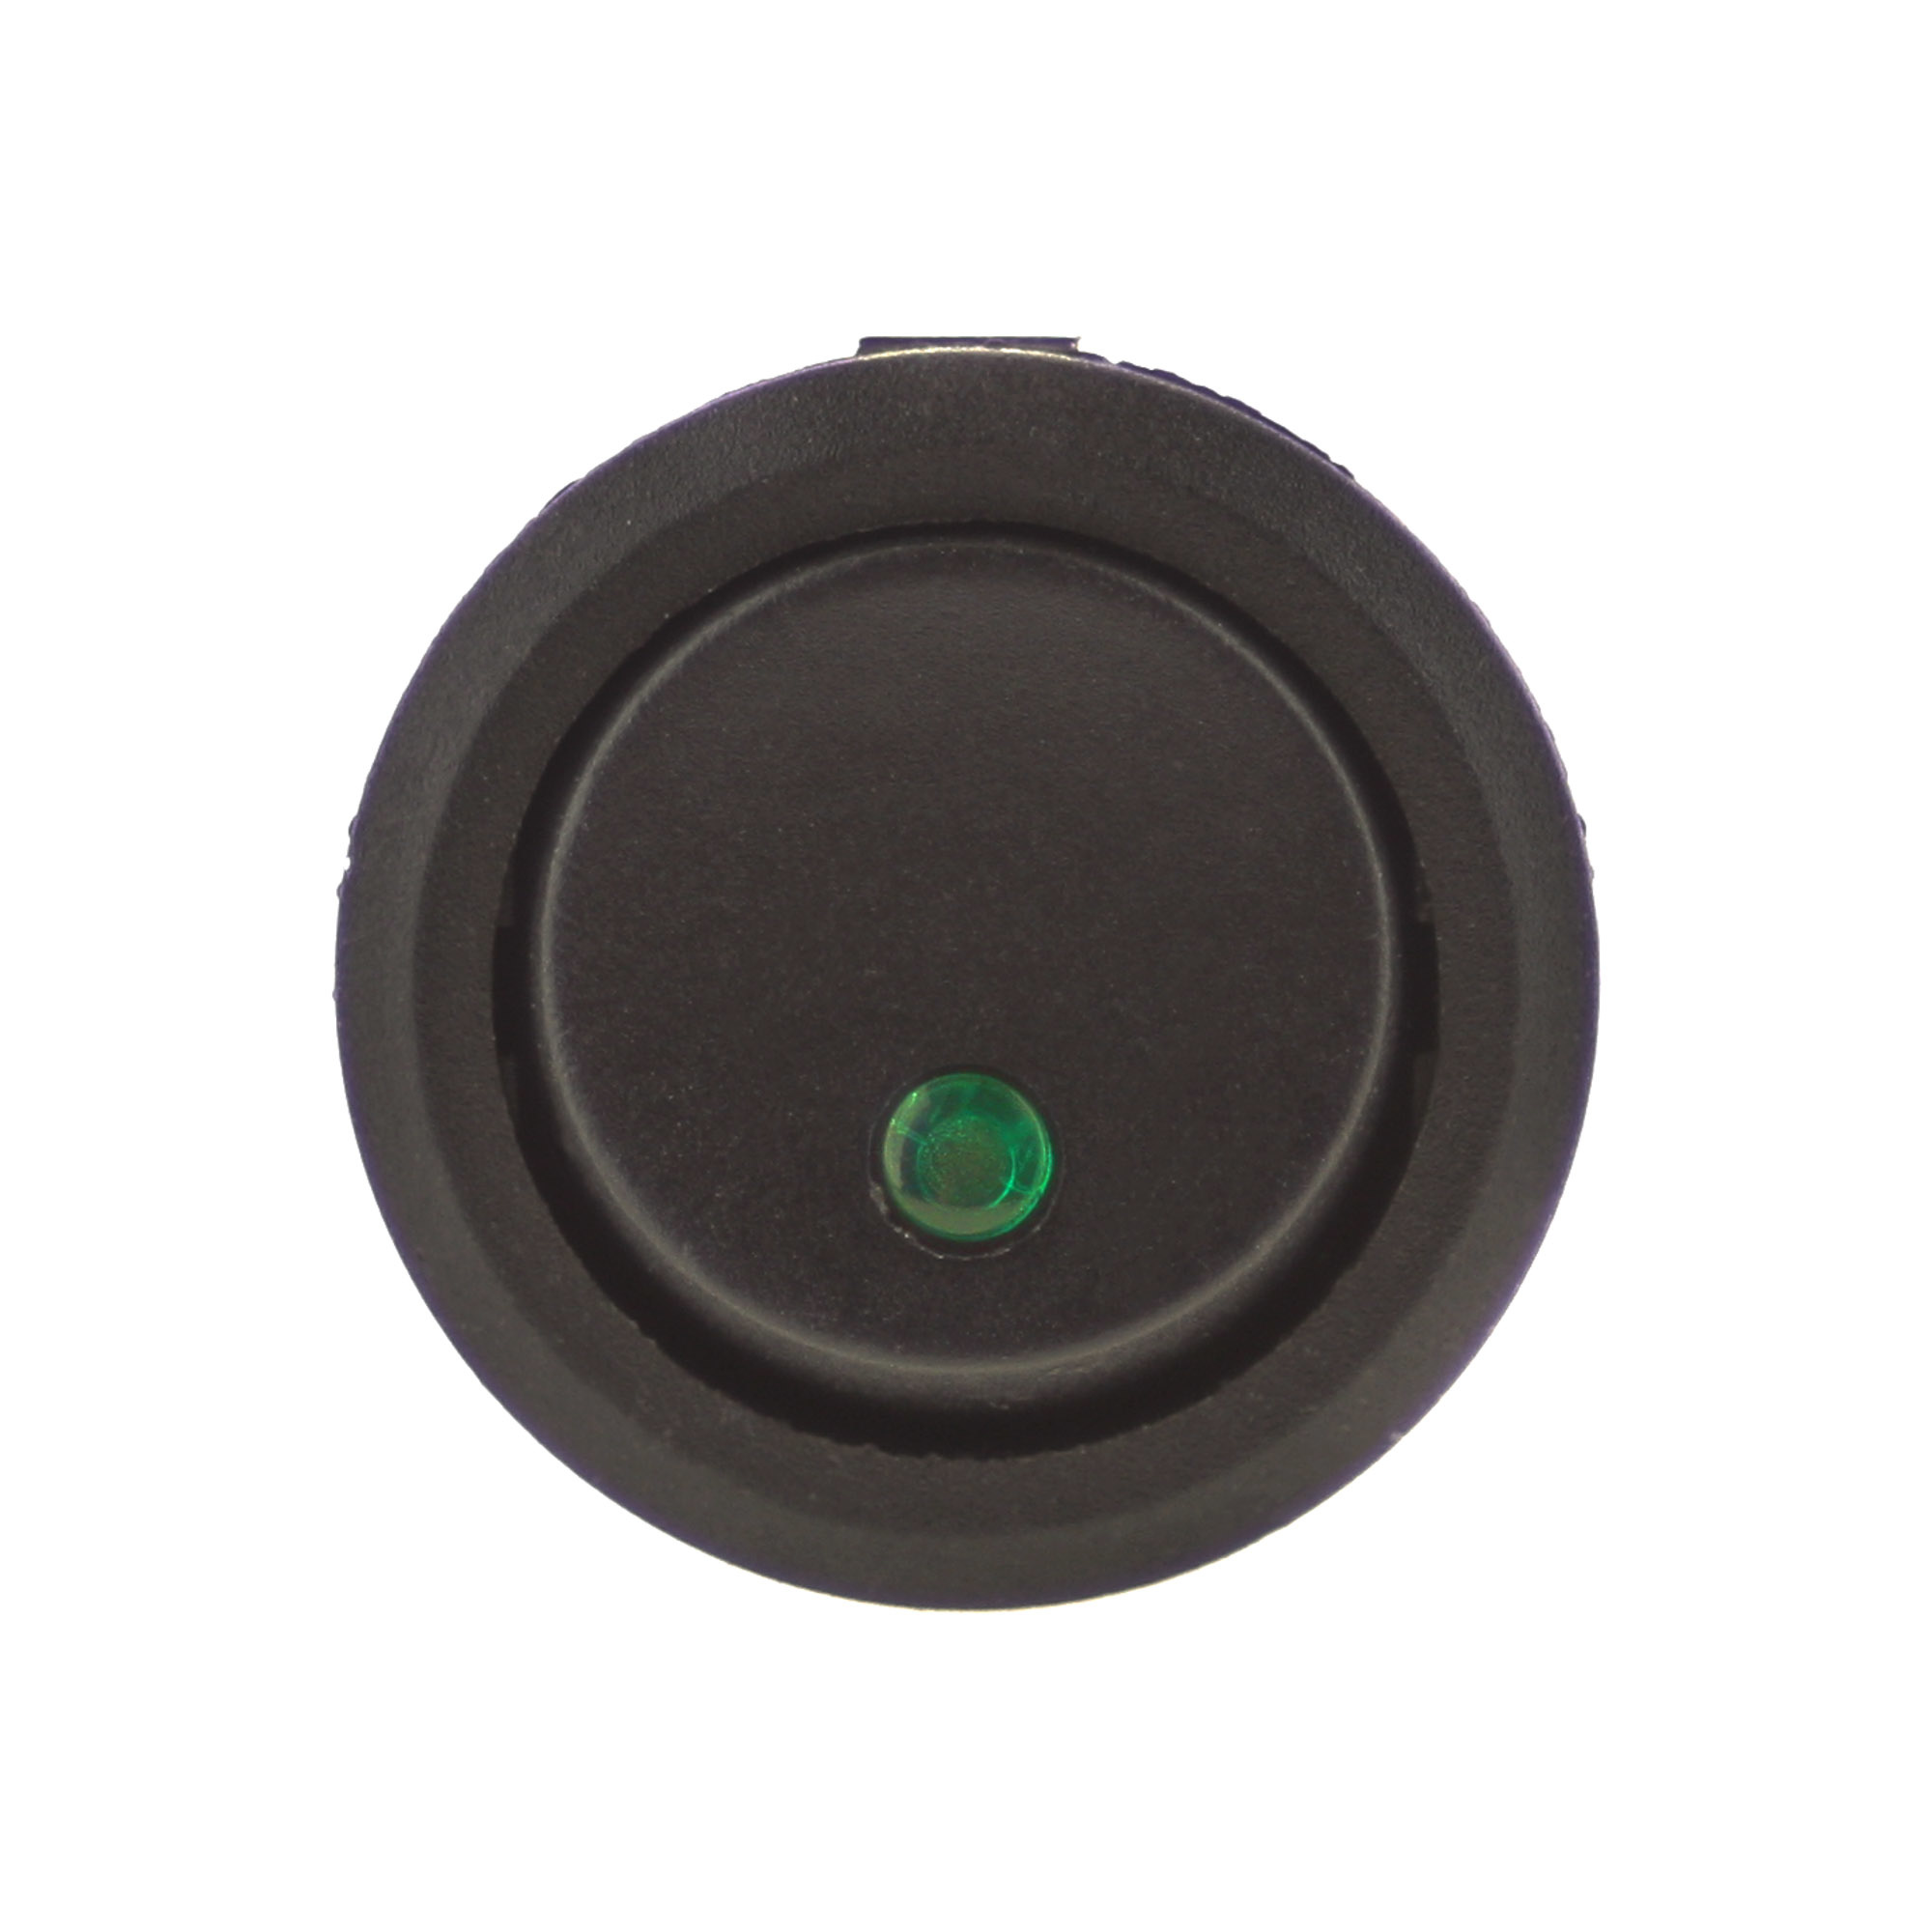 Switch I-0 12V 16A, 23mm round, green